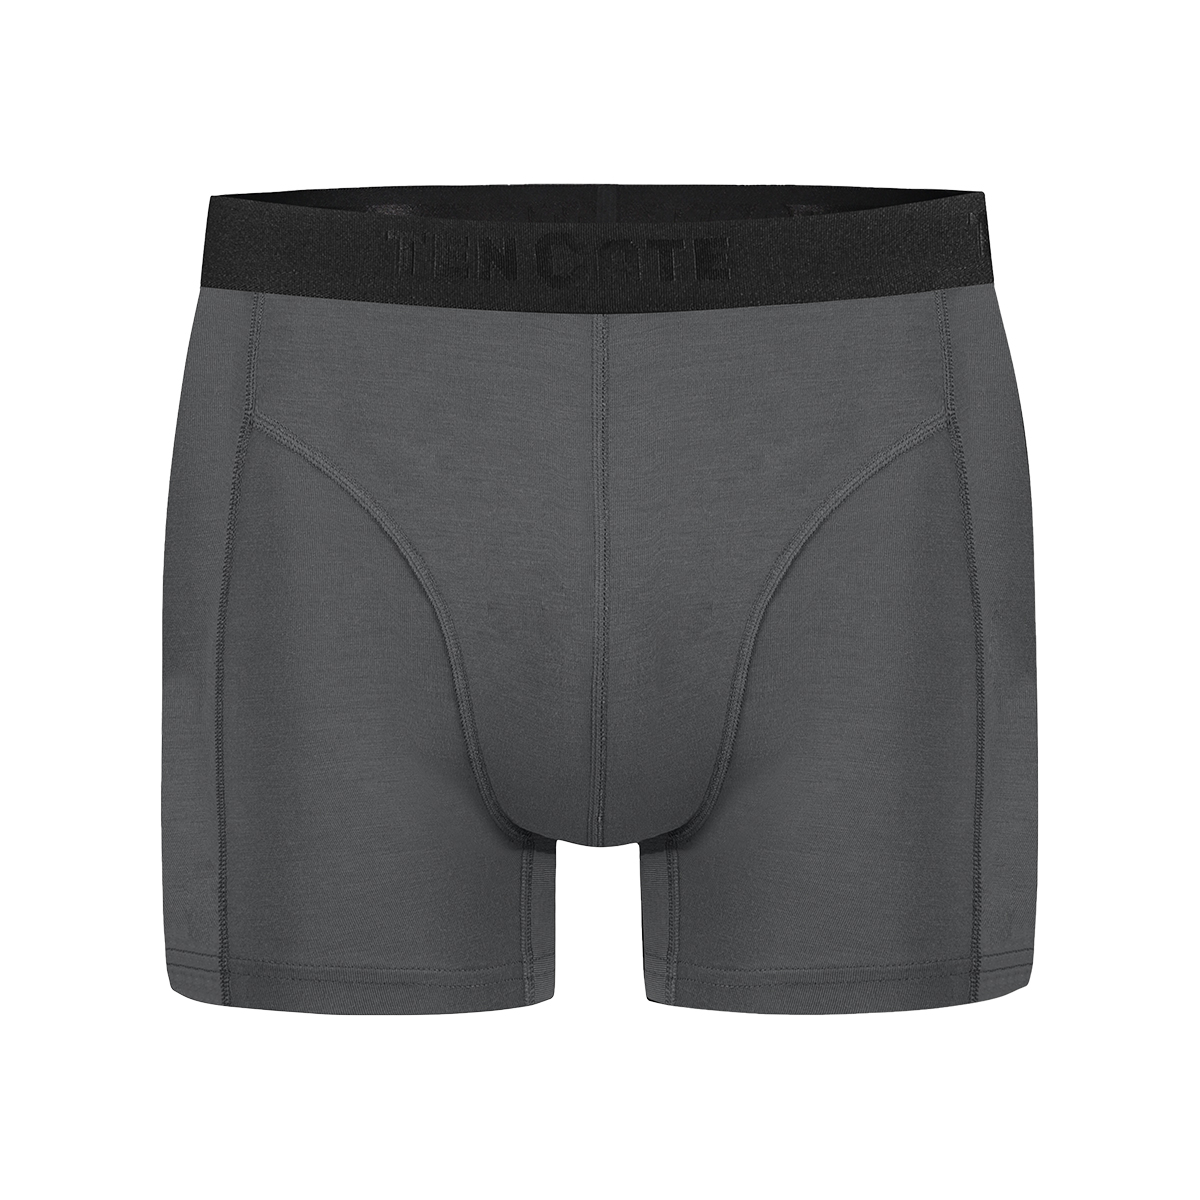 shorts grijs 2 pack